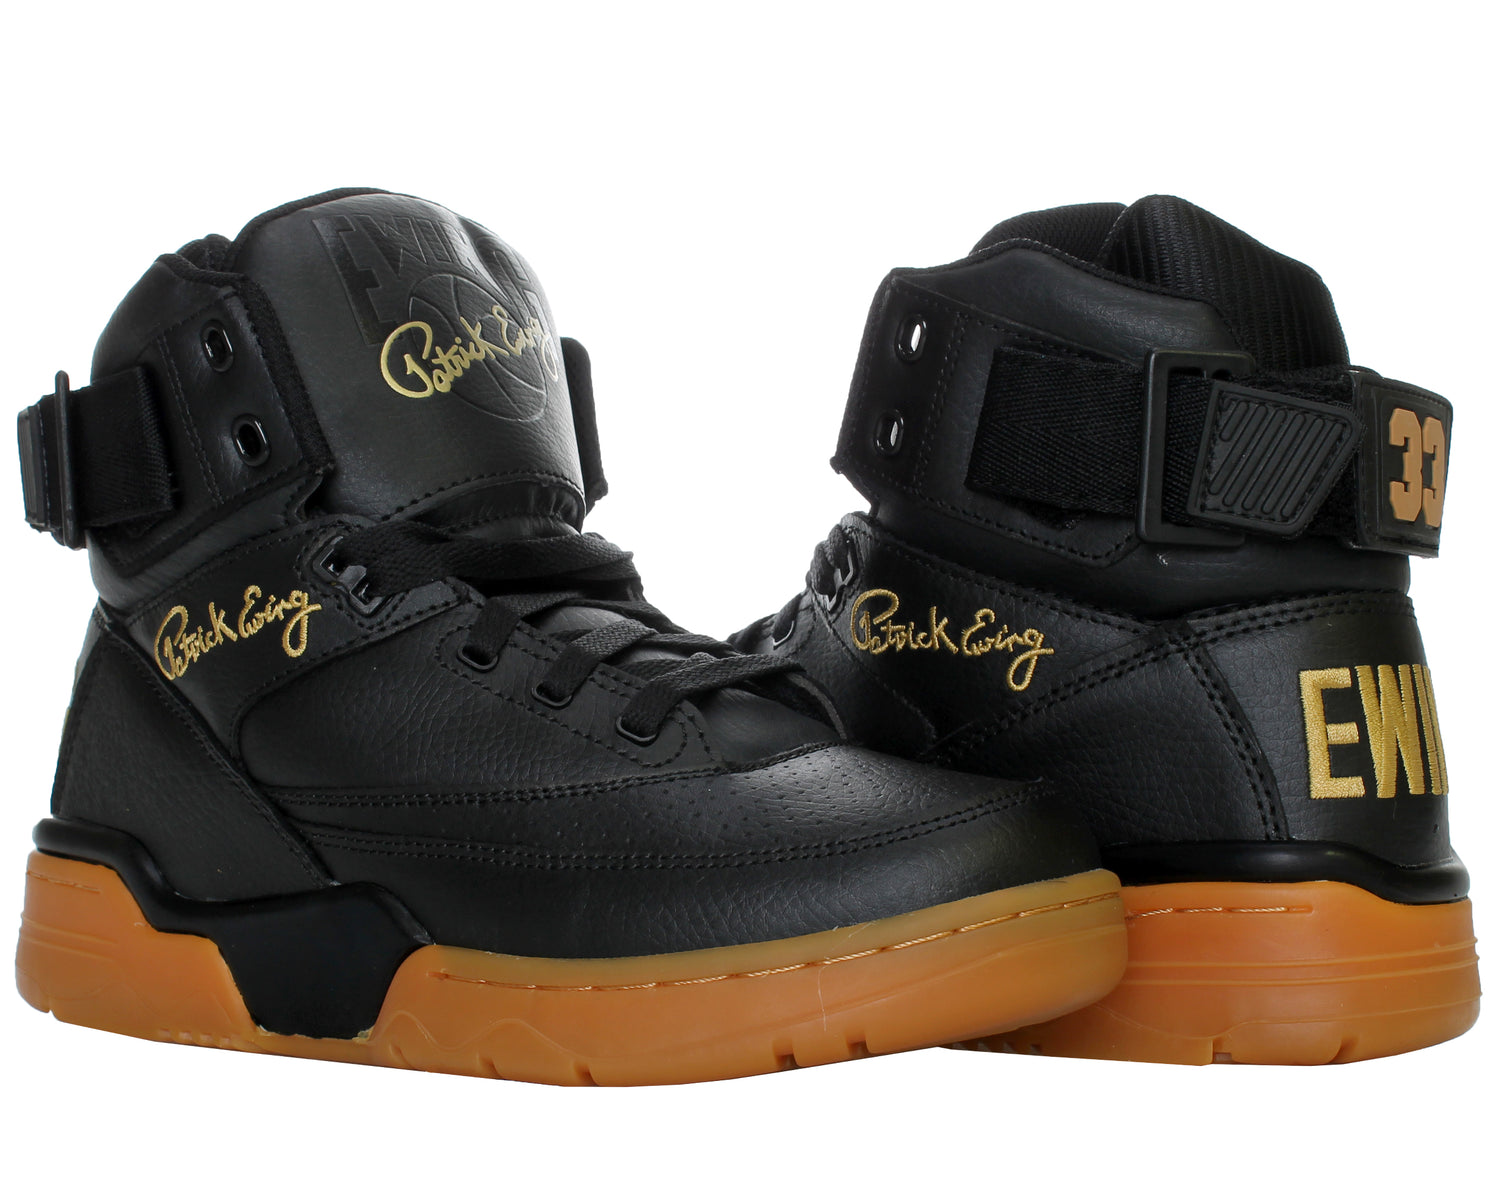 Ewing Athletics Ewing 33 Hi Black/Gum Men's Basketball Shoes